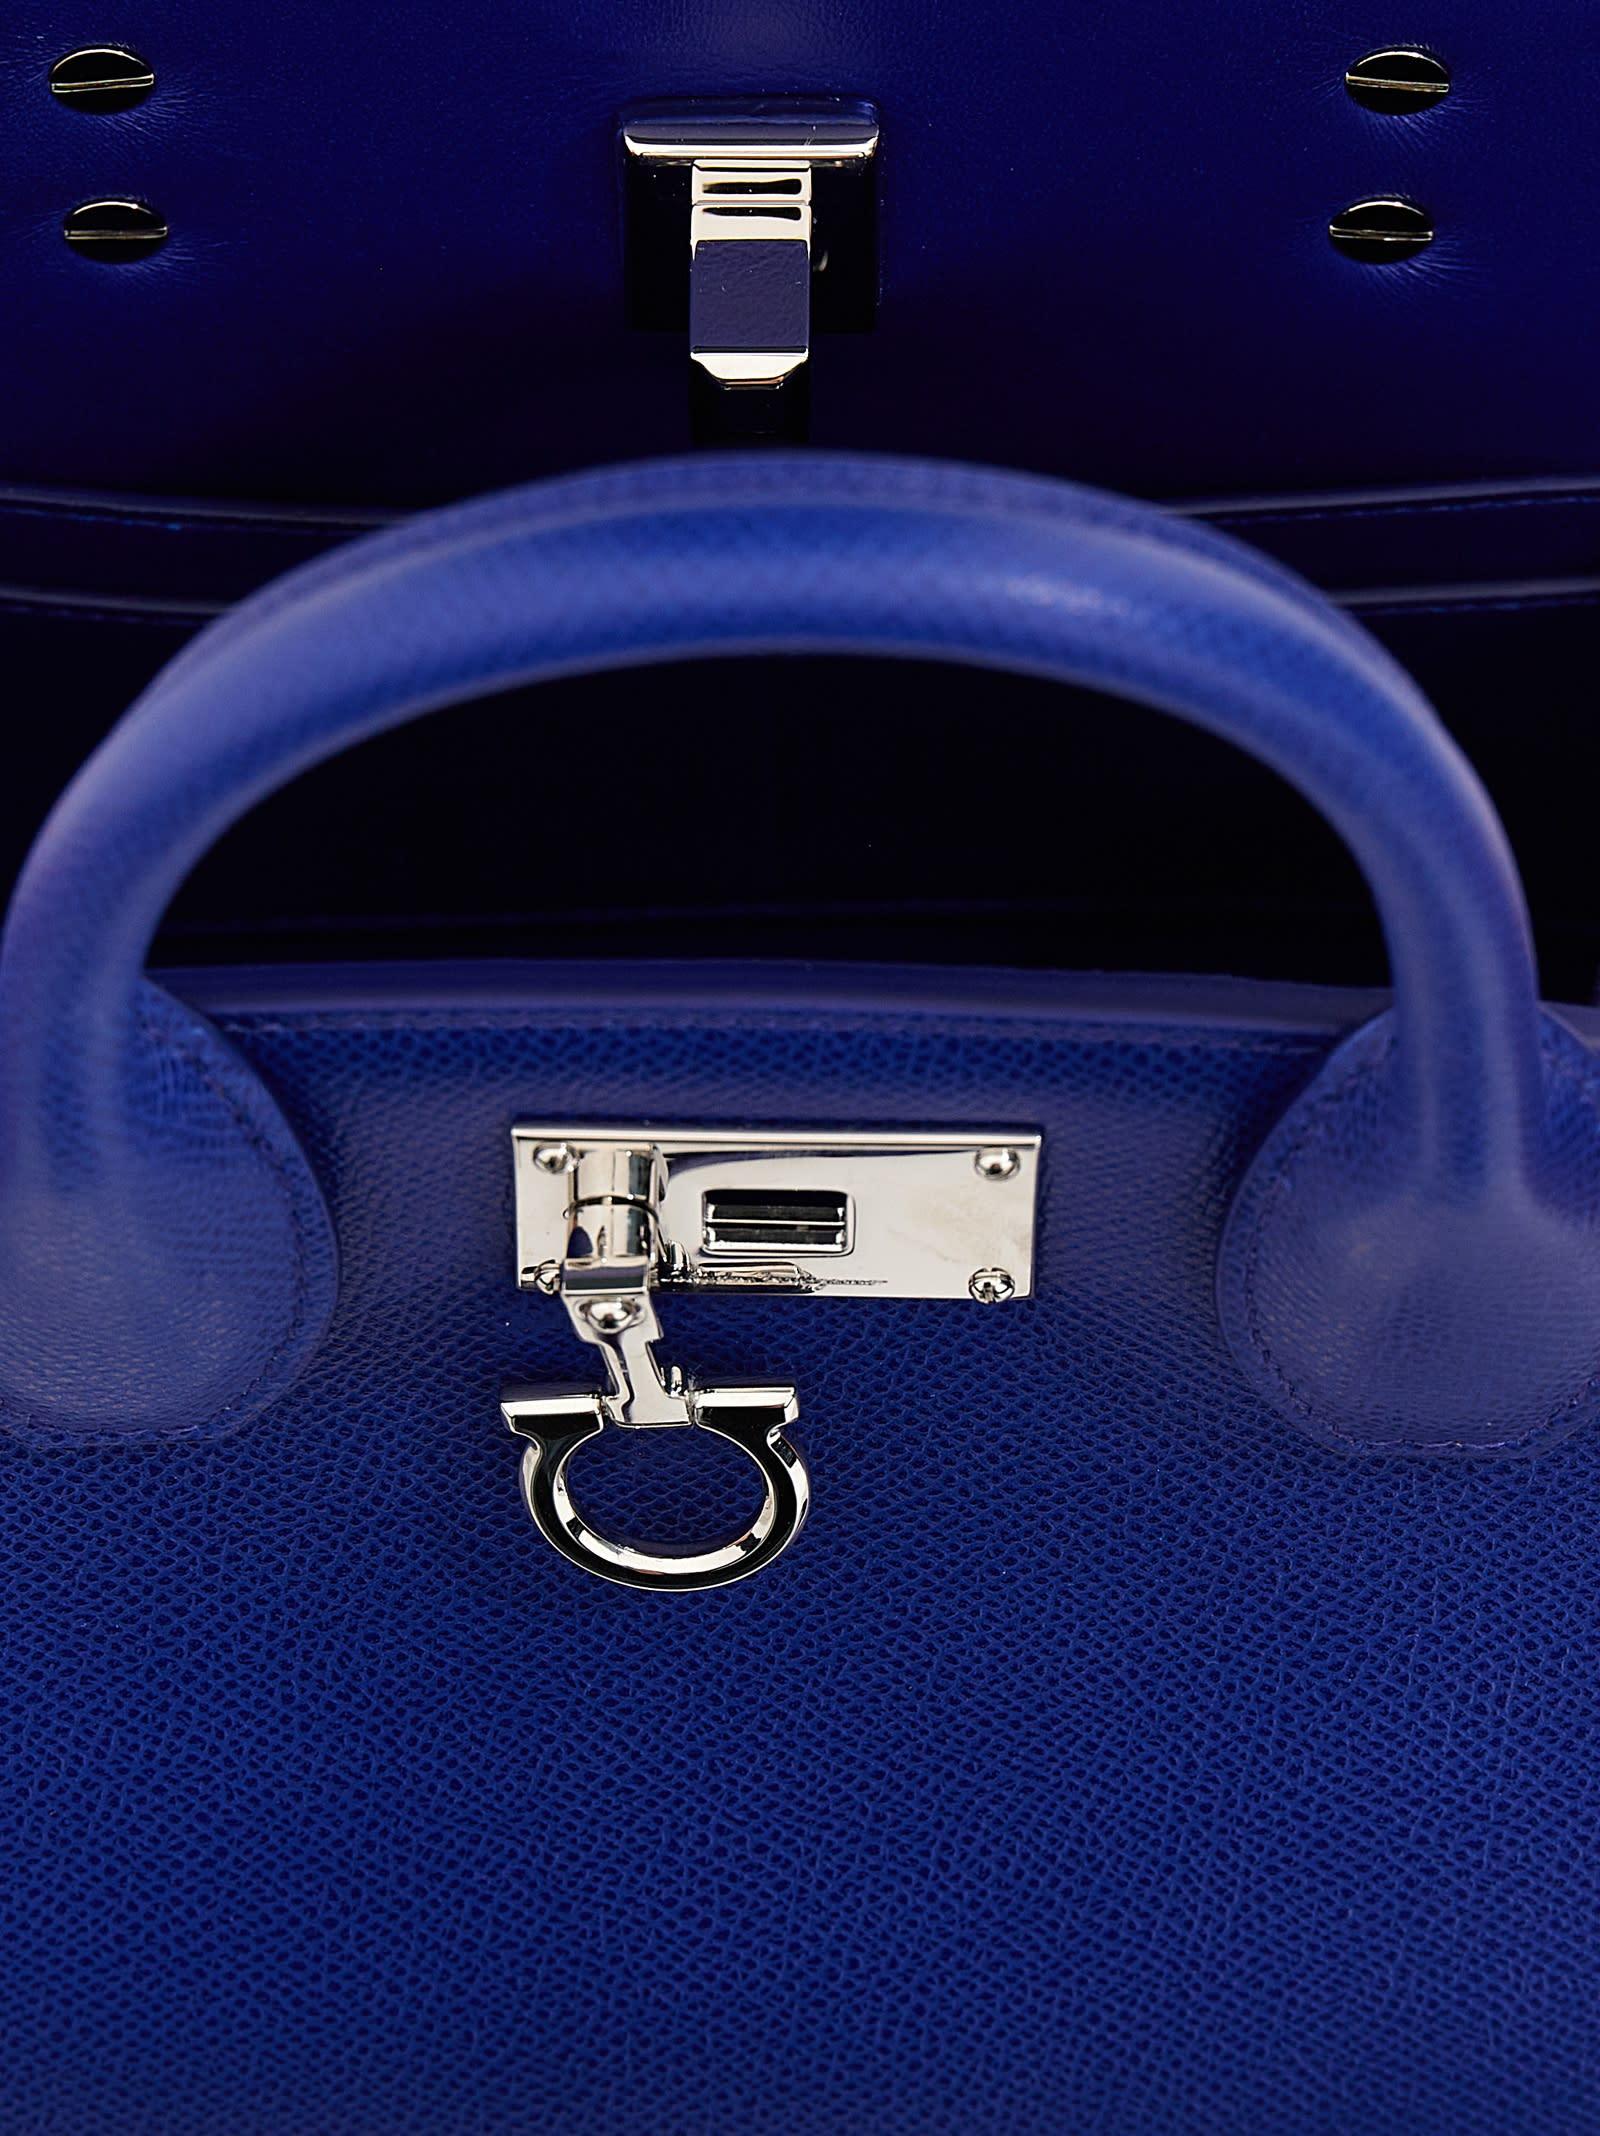 Ferragamo Mini Studio Box Handbag in Blue